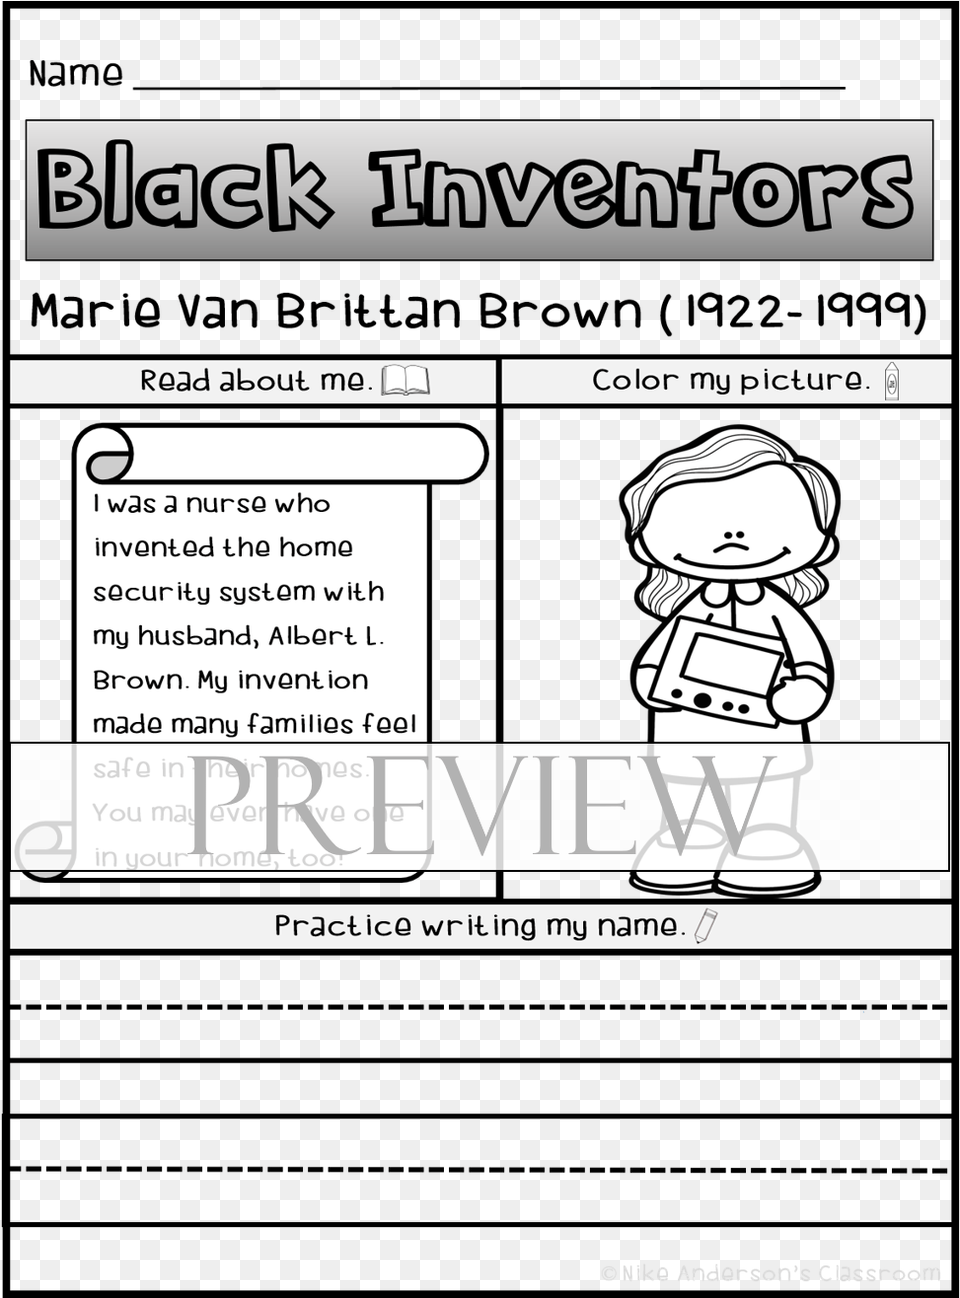 Marie Van Brittain Brown African American Inventor Cartoon, Book, Comics, Publication, Advertisement Free Png Download